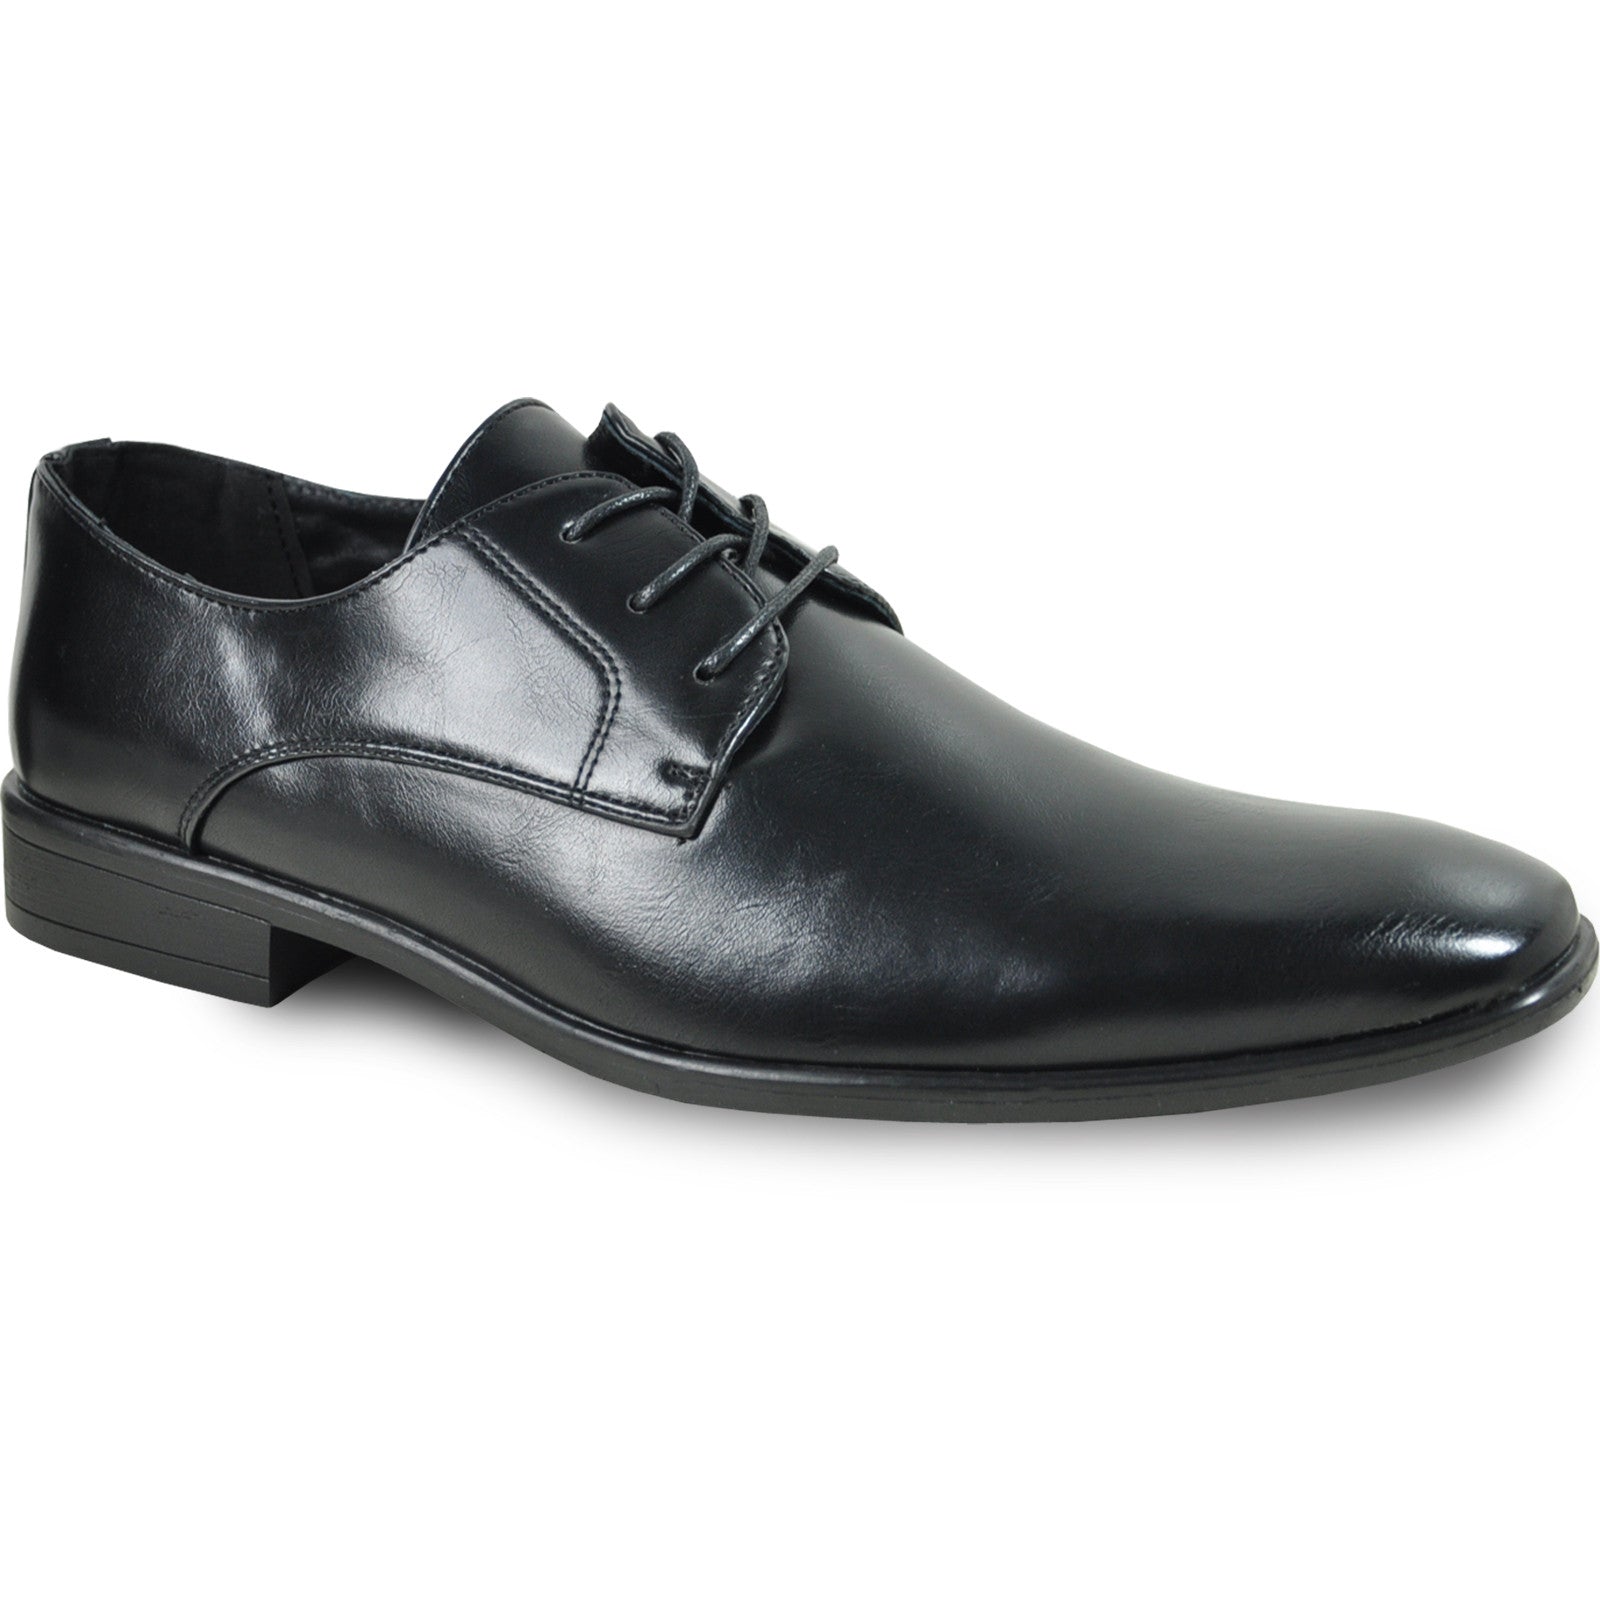 "Black Oxford Dress Shoe - Men's Pointed Plain Toe Style"